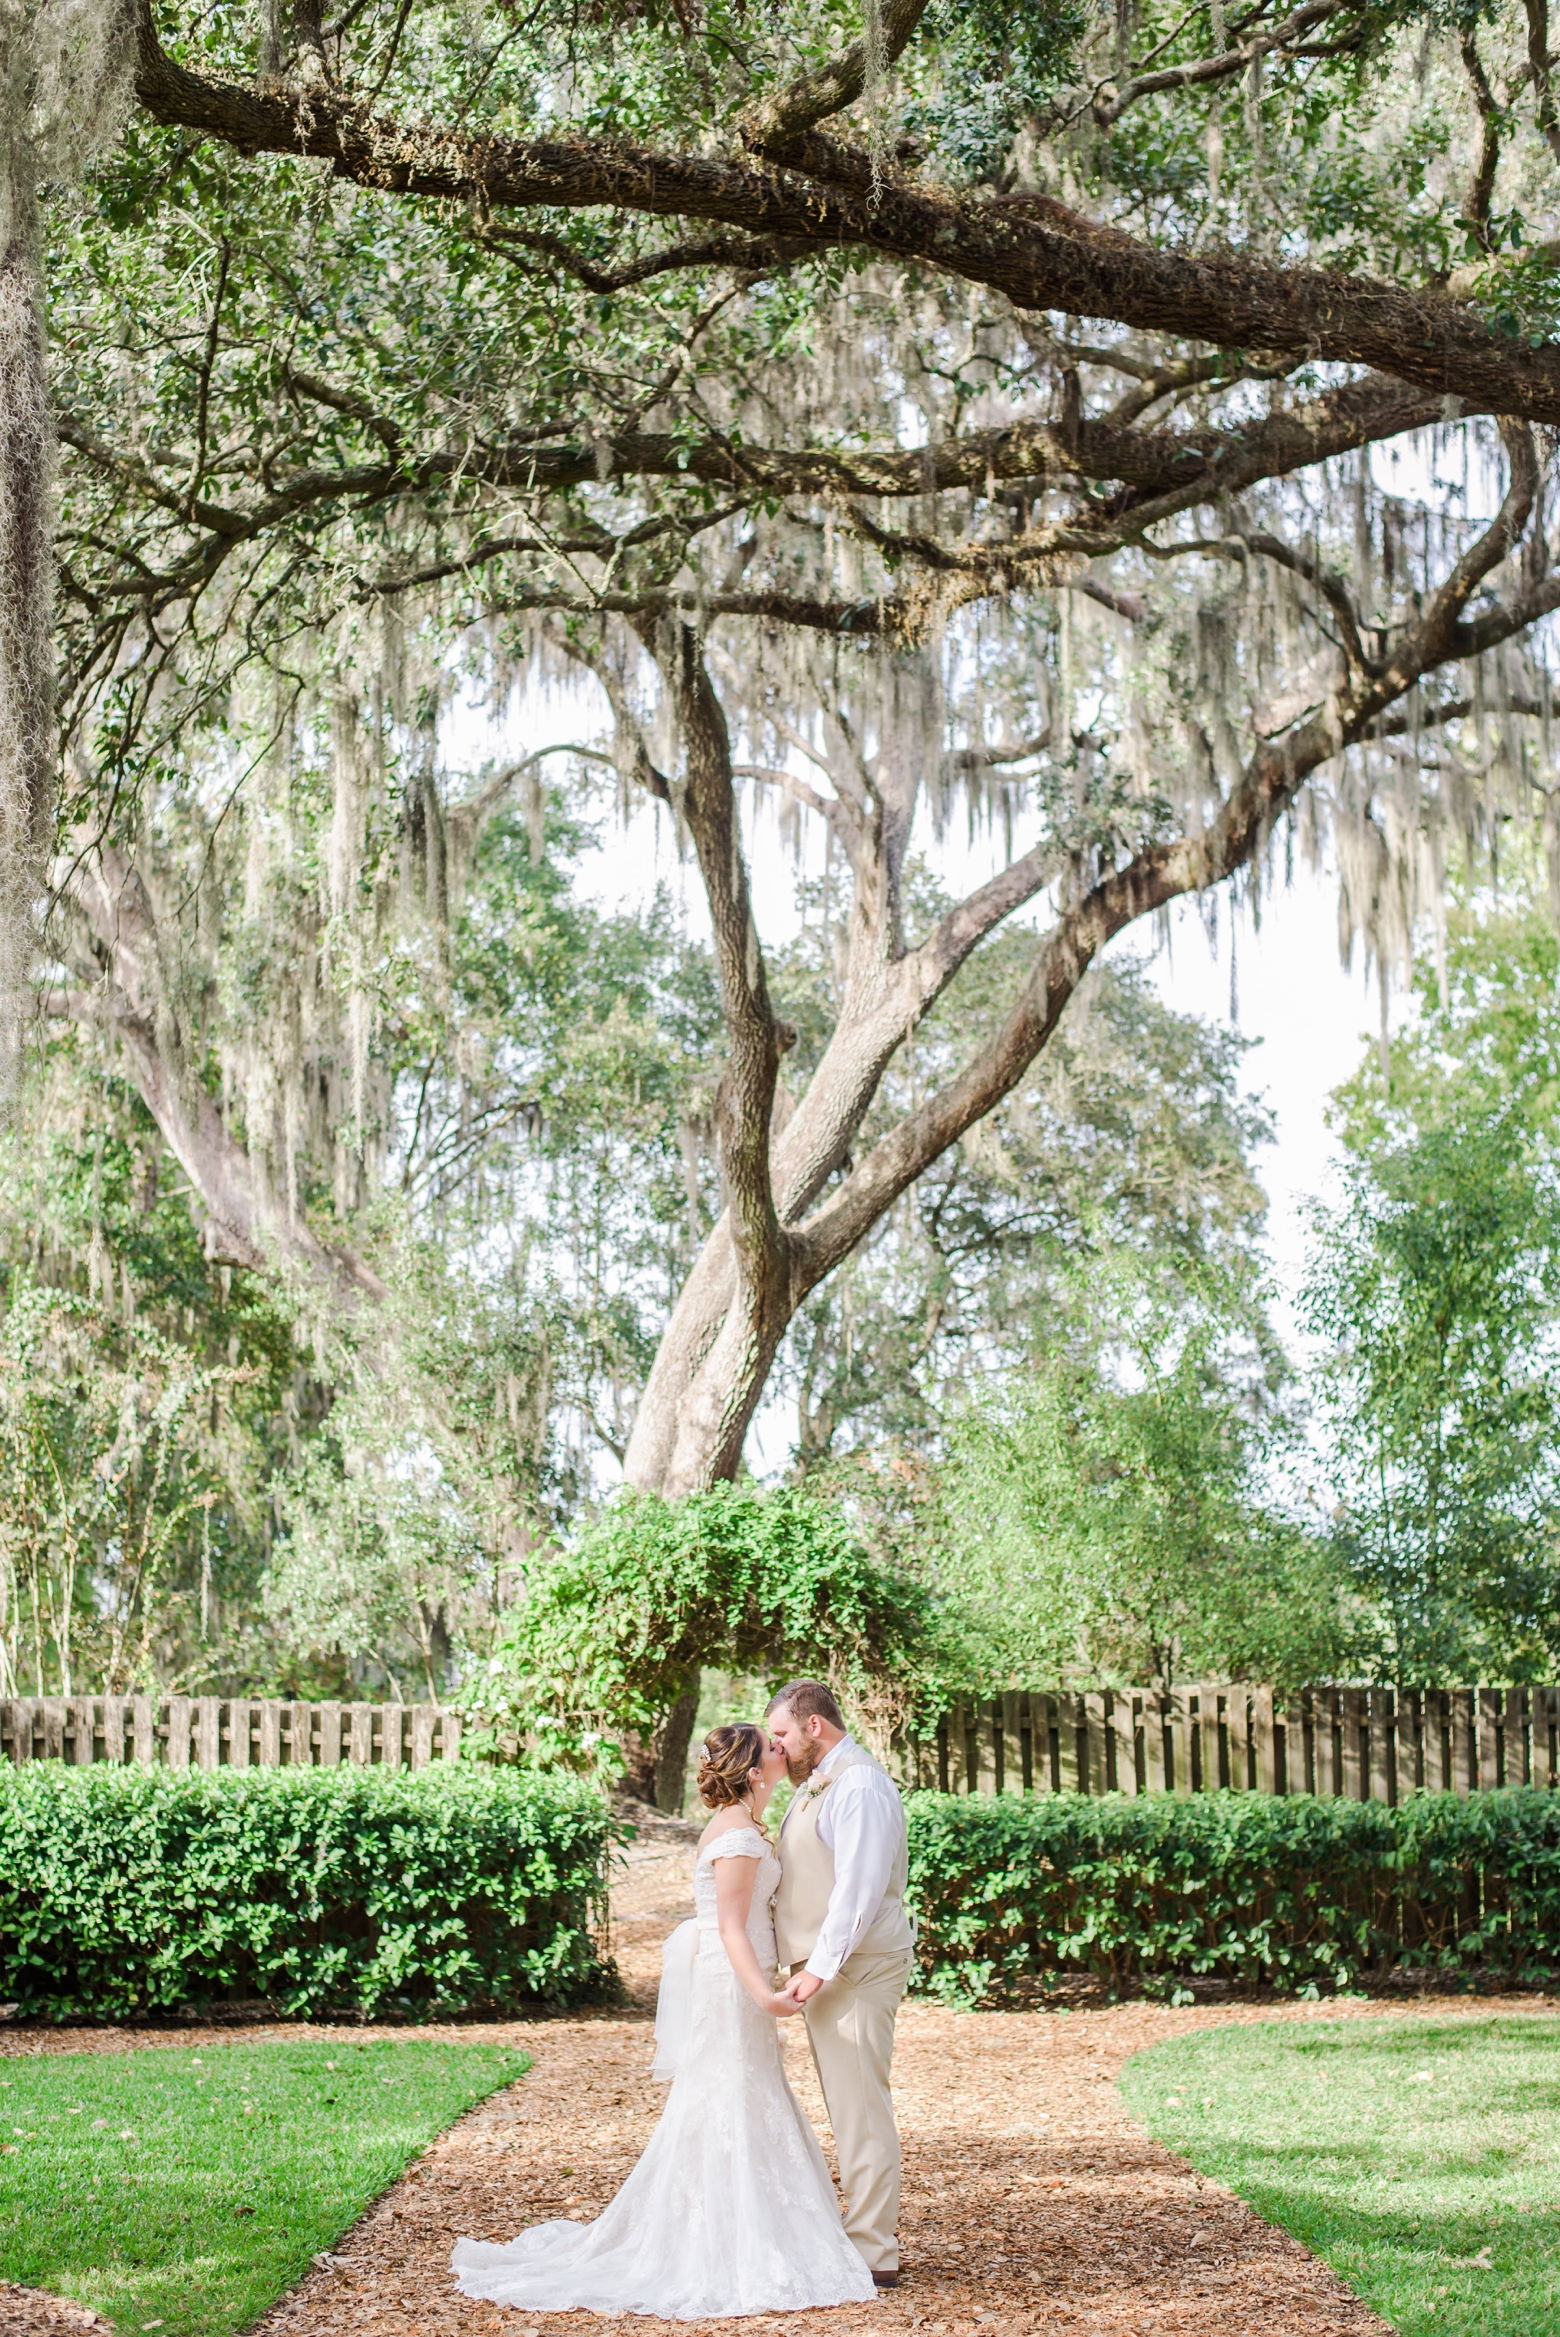 Bridal portrait under the old oak trees at cross creek ranch in Seffner, FL